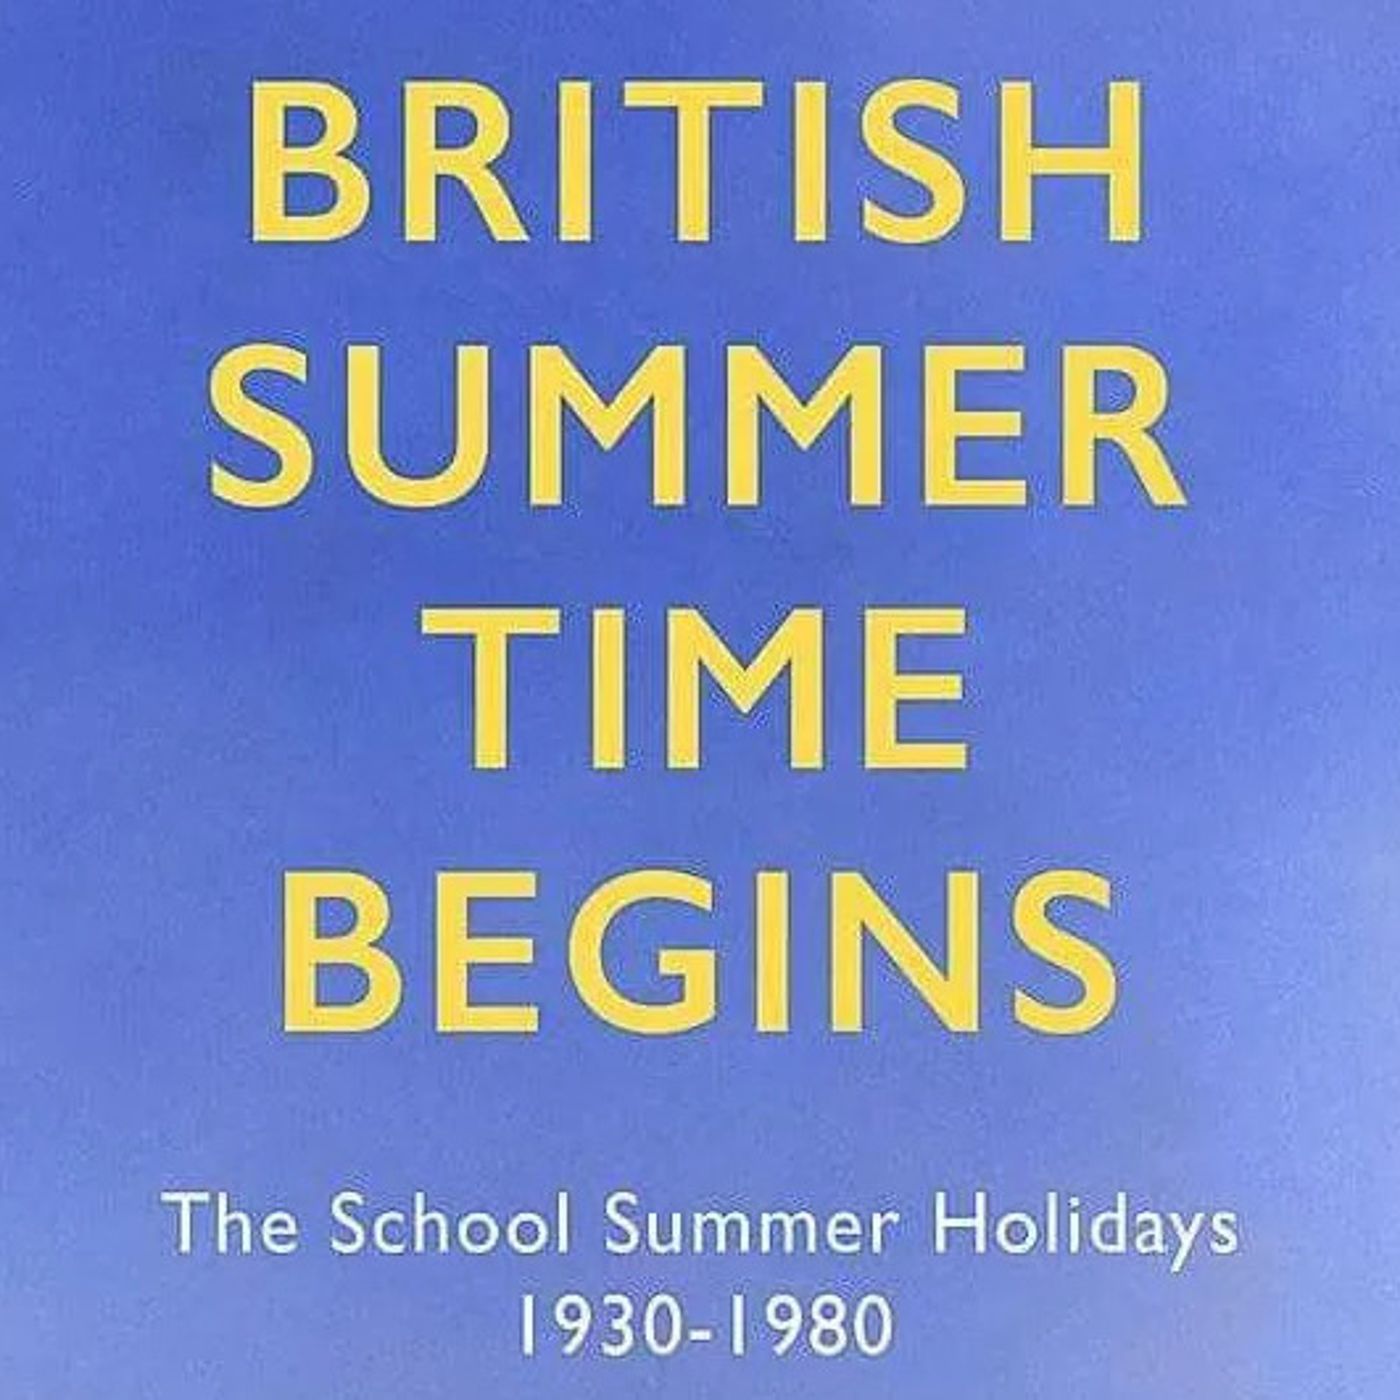 Ysenda Maxtone Graham: British Summer Time Begins